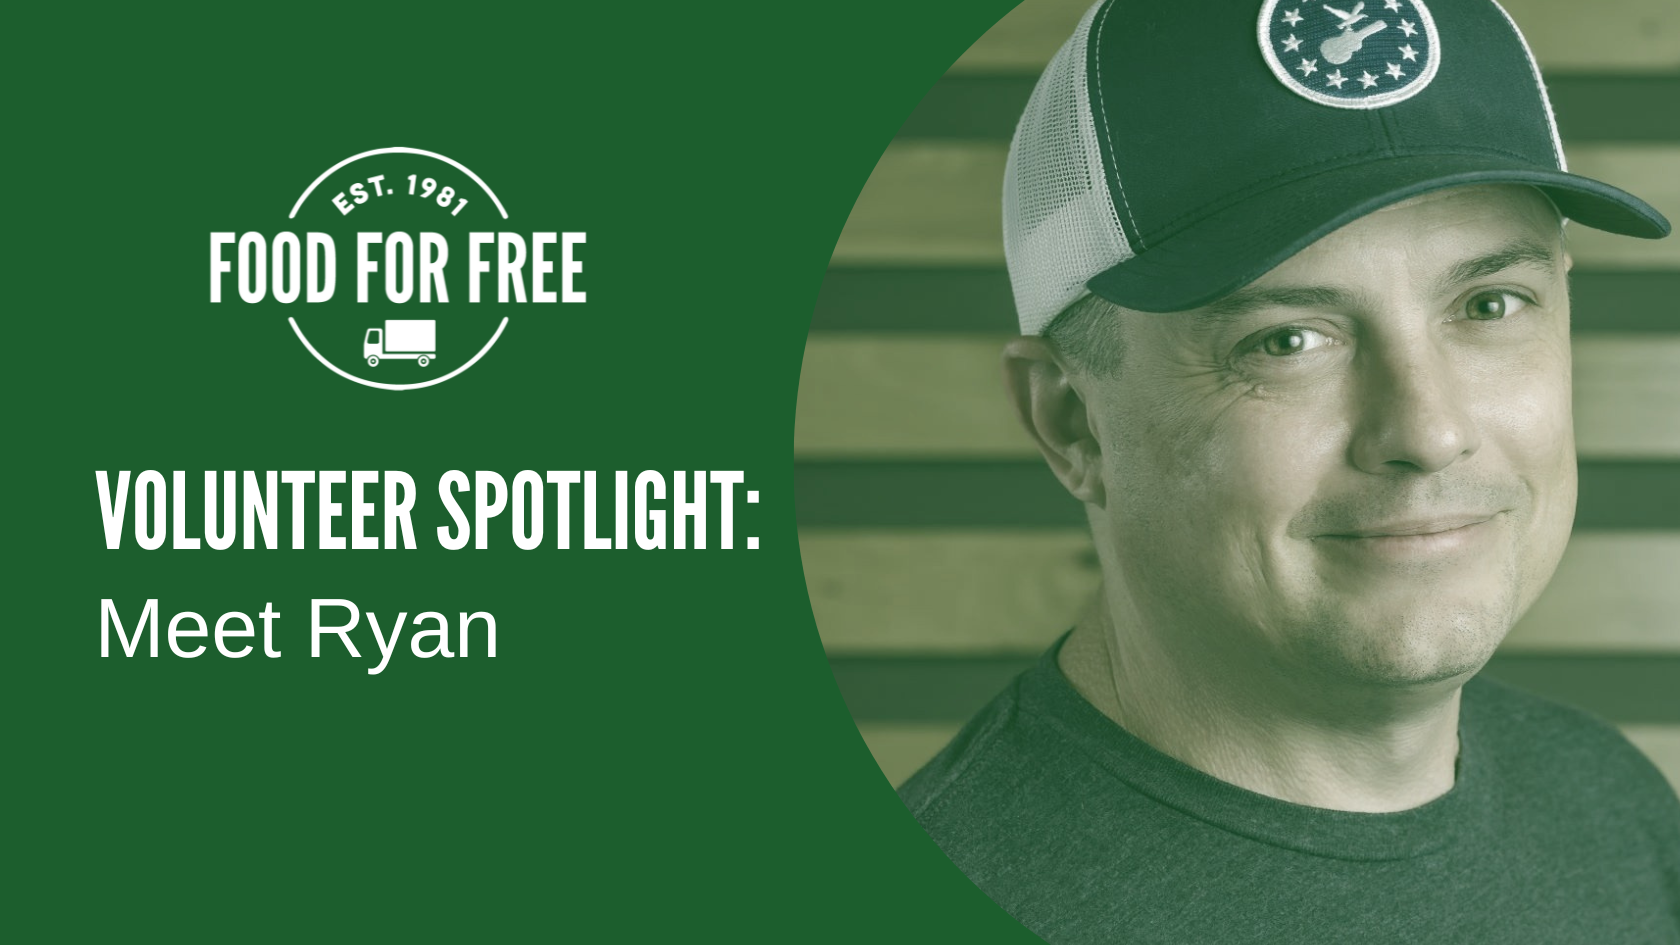 Photo of Ryan Doyon with Food For Free logo and text, "Volunteer Spotlight: Meet Ryan".